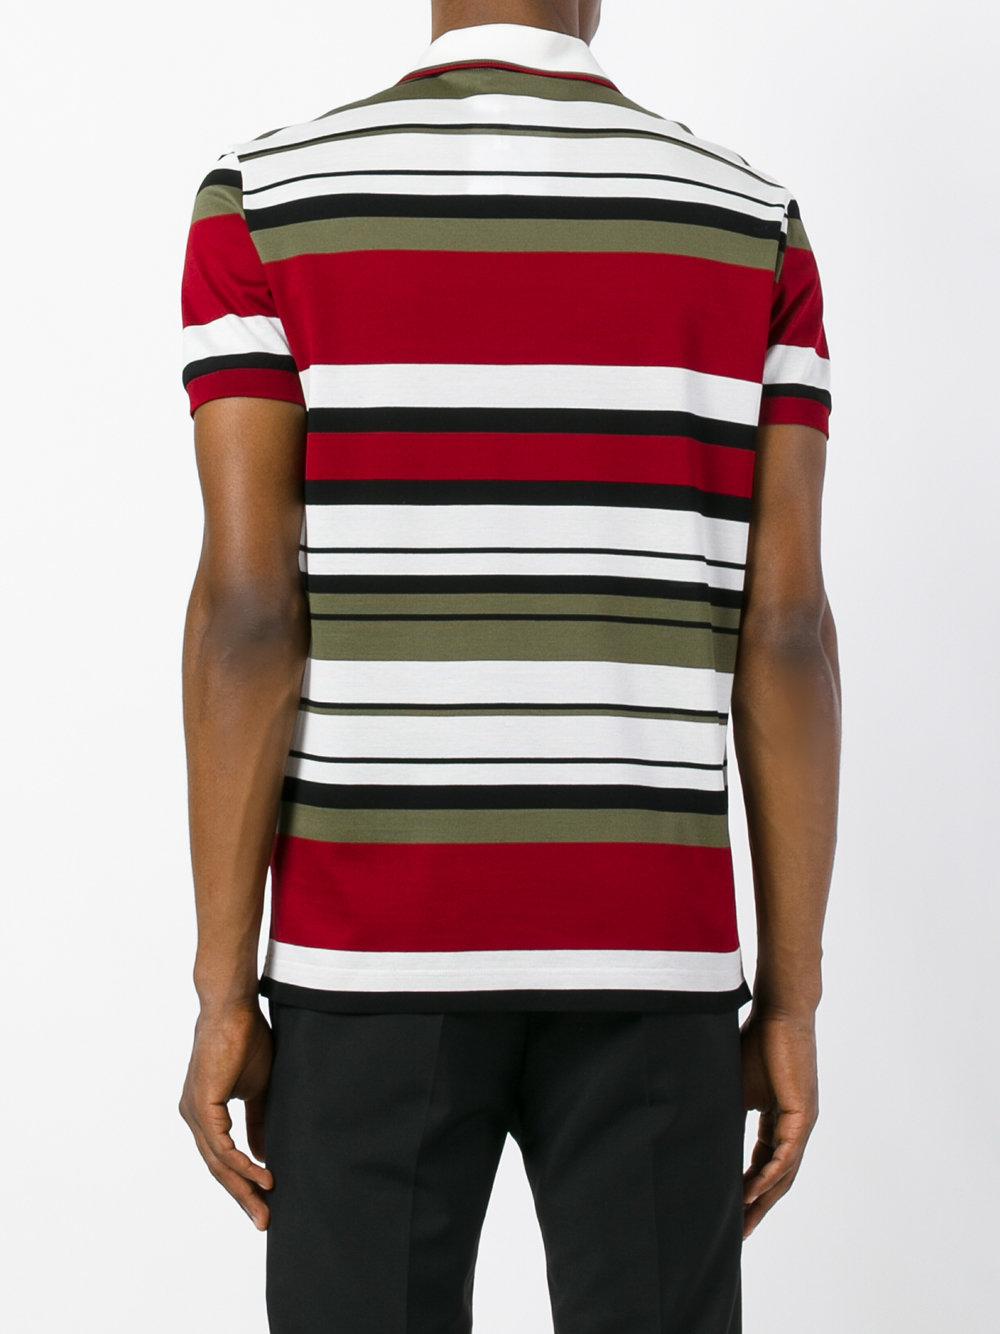 Ferragamo Cotton Horizontal Striped Polo Shirt in Red for Men - Lyst